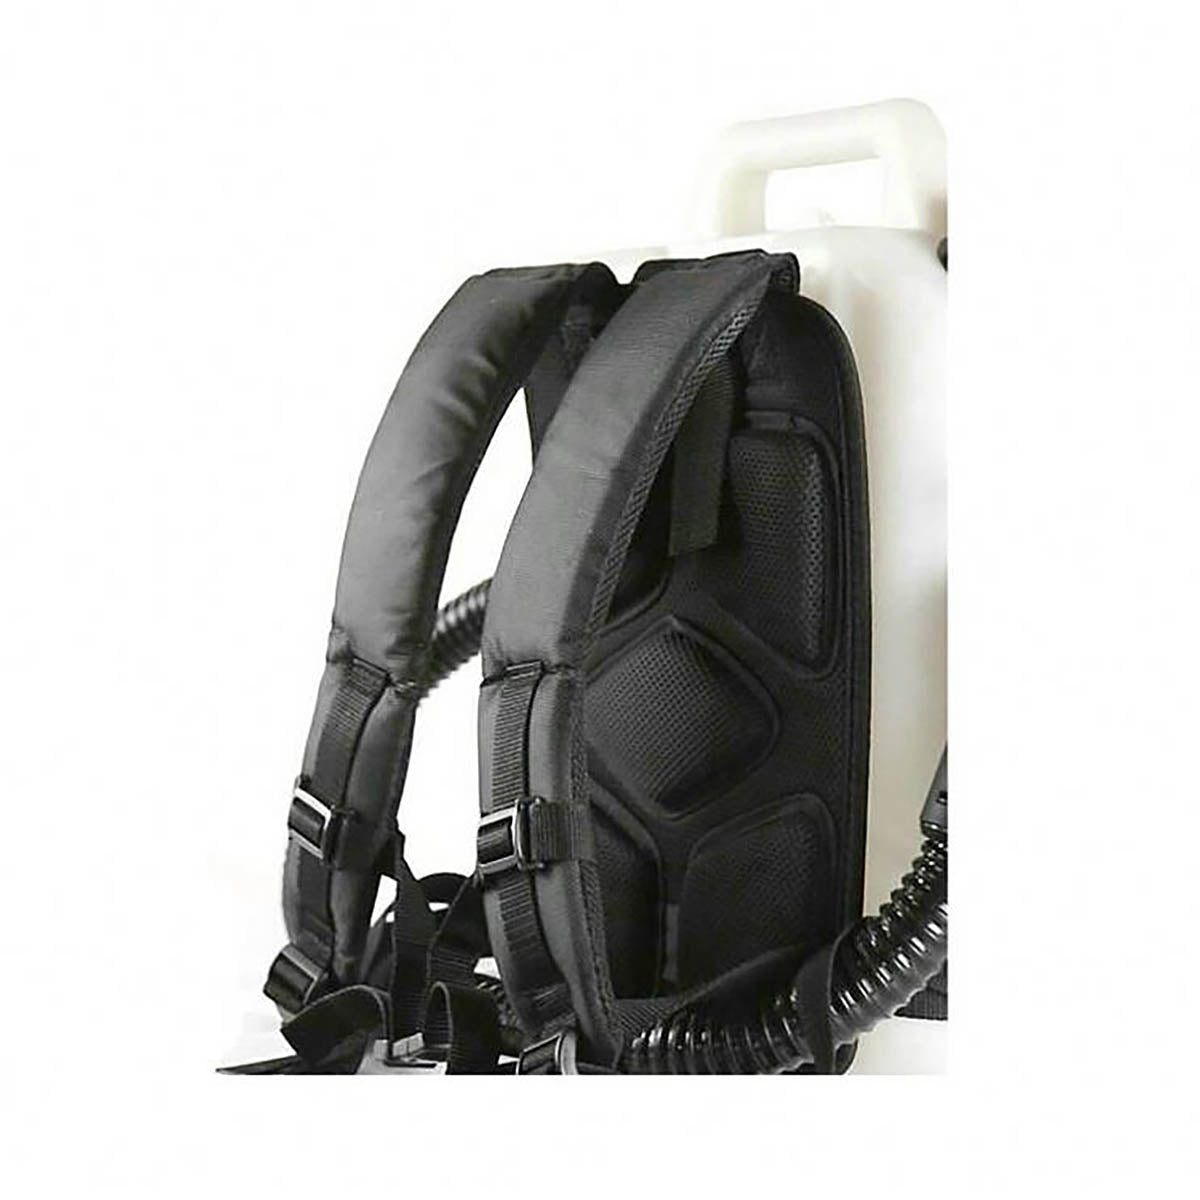 SafePRO® Backpack Battery Powered ULV Cold Fogger (10L)